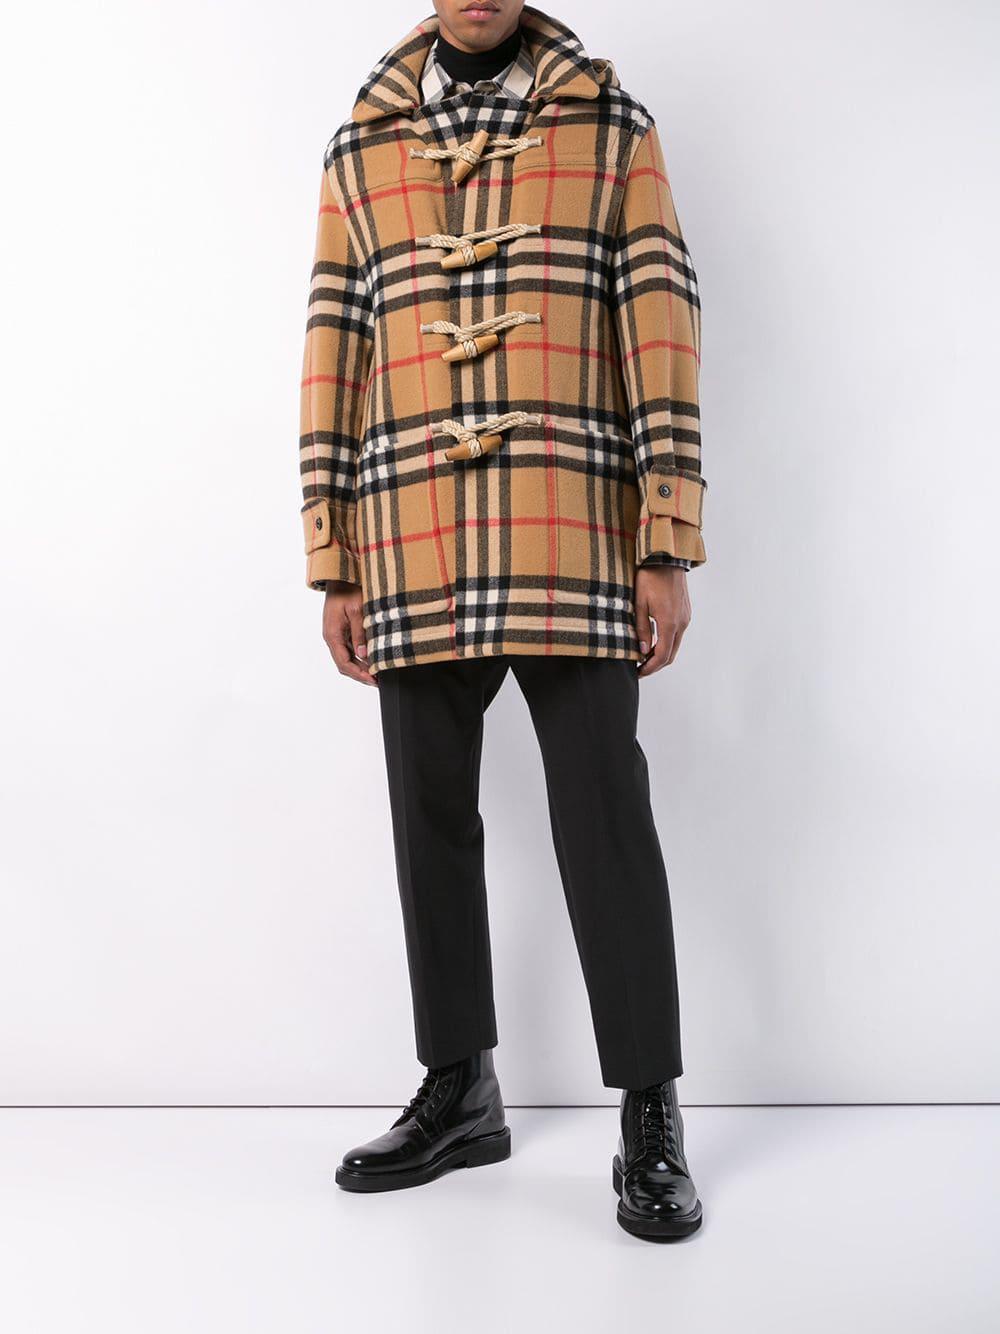 Gosha Rubchinskiy Synthetic X Classic Check Duffle Coat in Brown for Men - Lyst